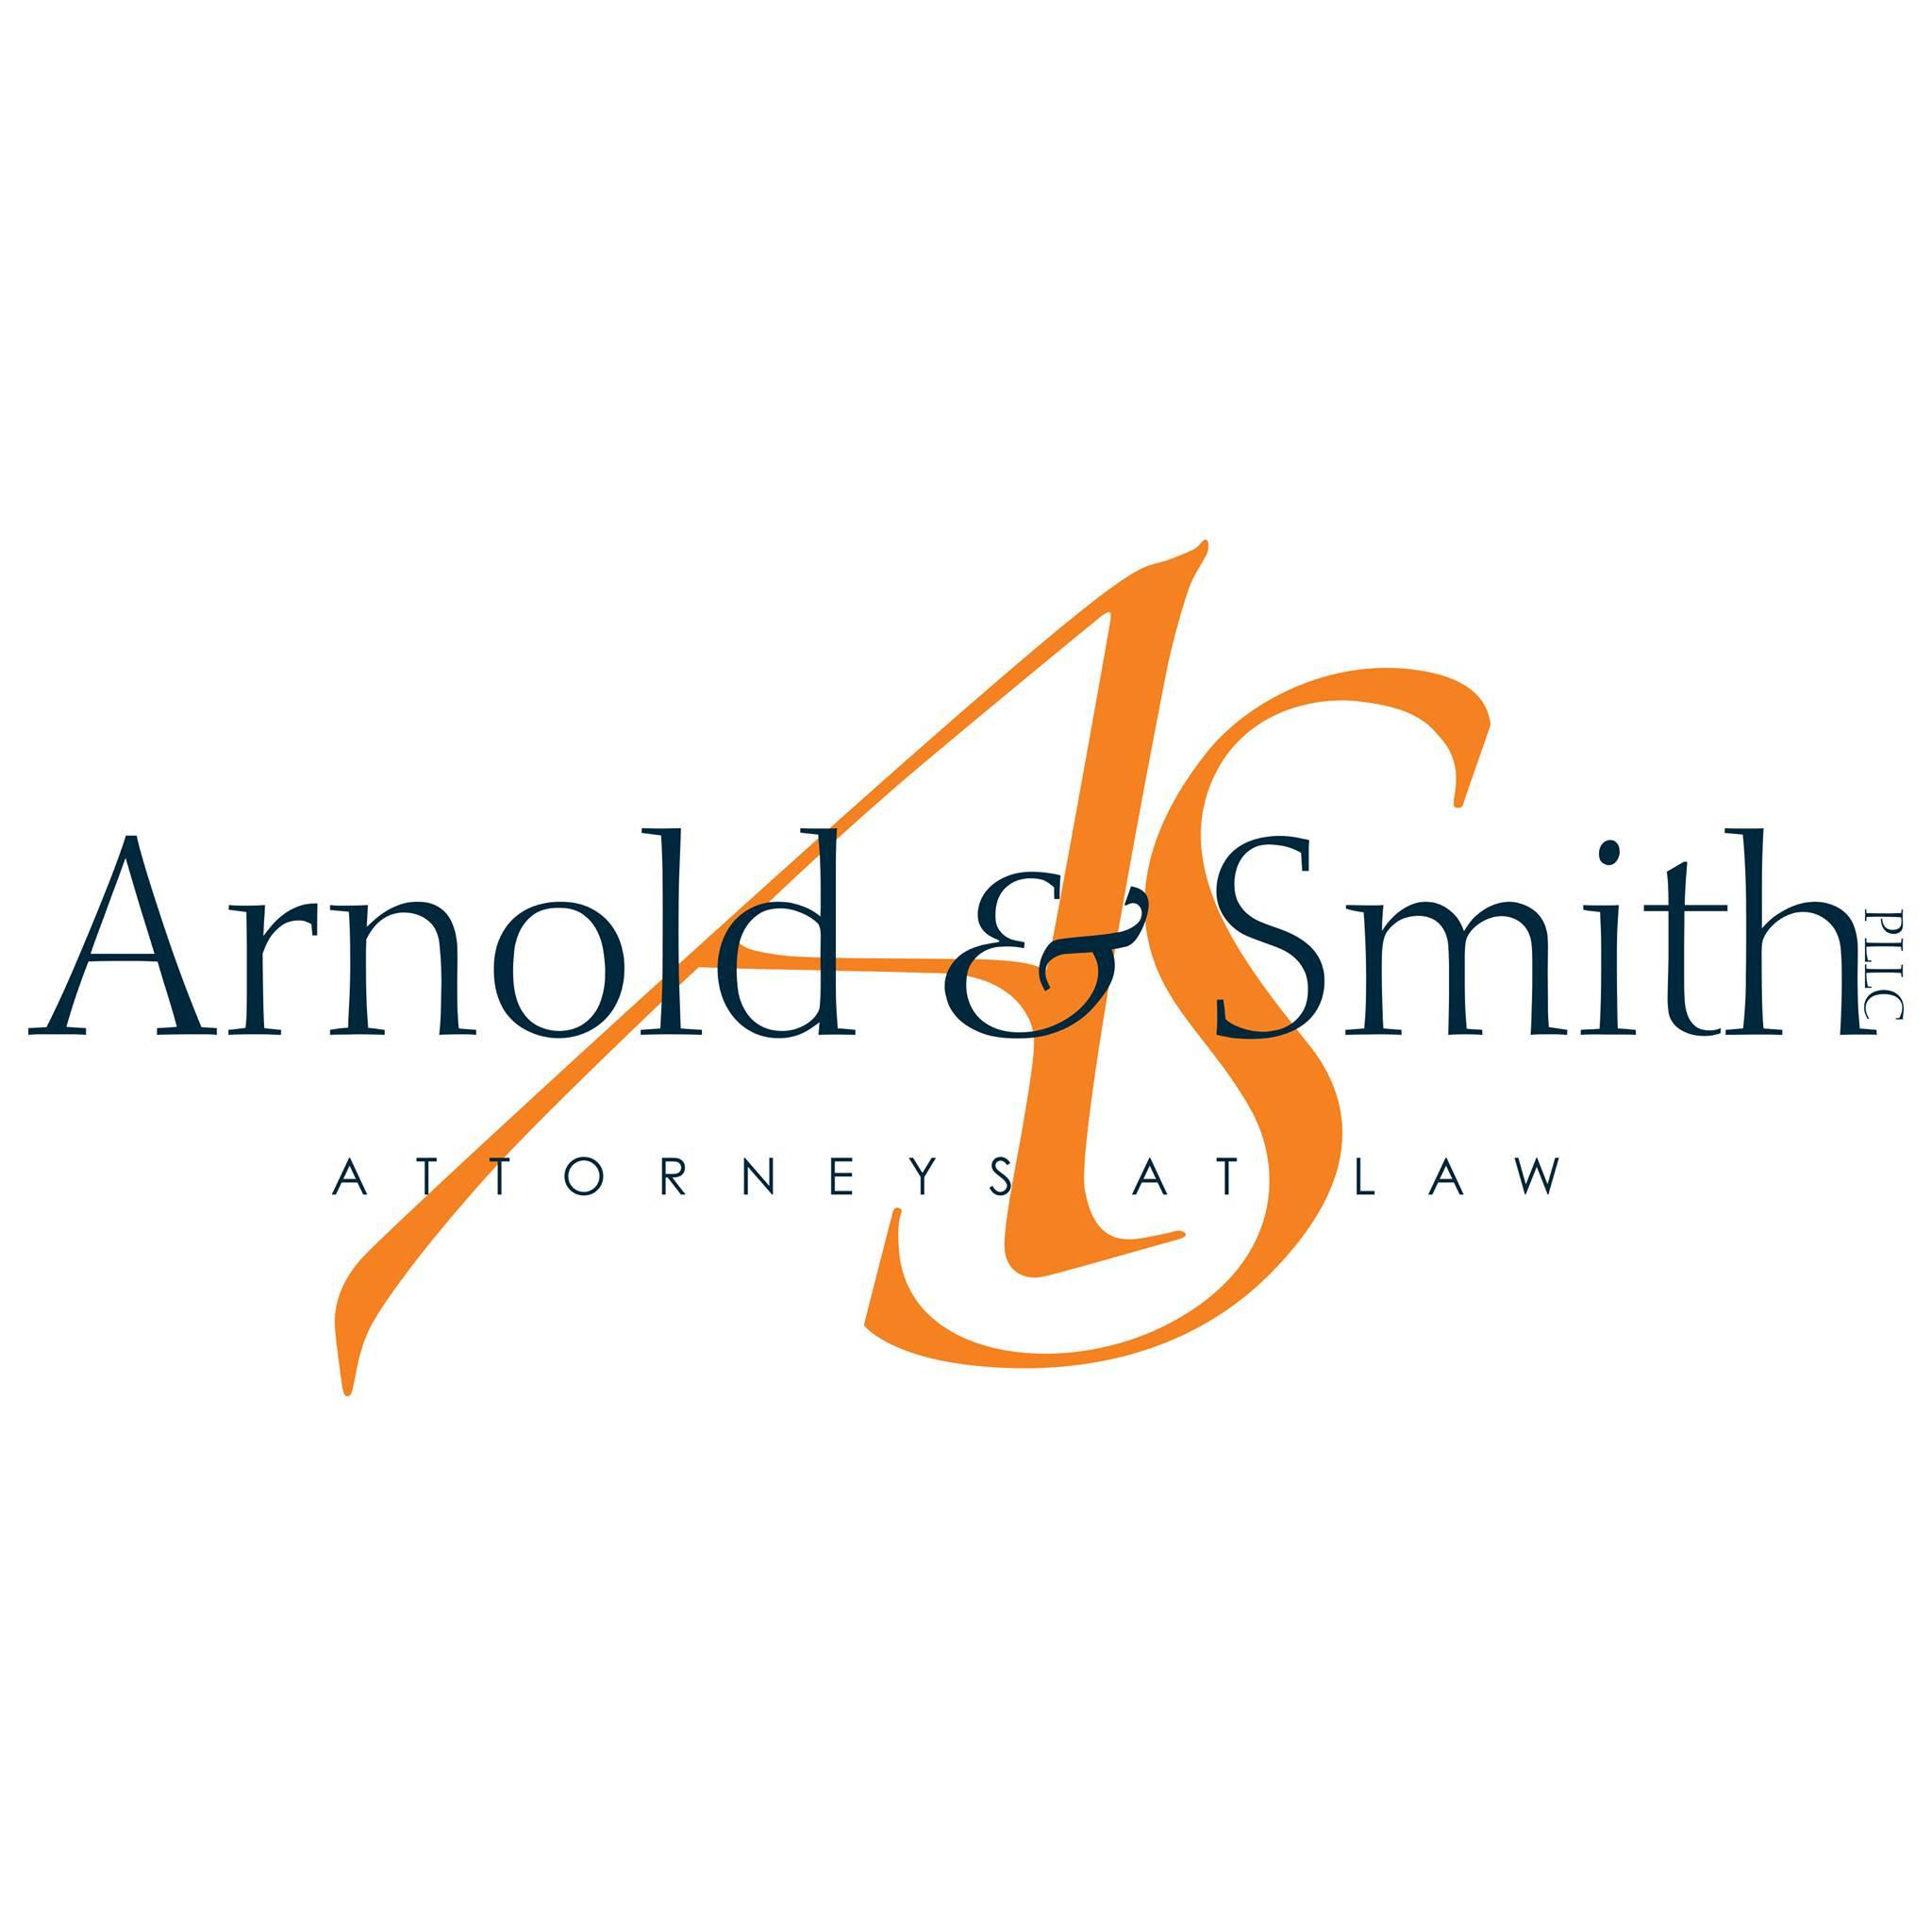 Arnold & Smith PLLC Arnold & Smith, PLLC Charlotte (704)370-2828